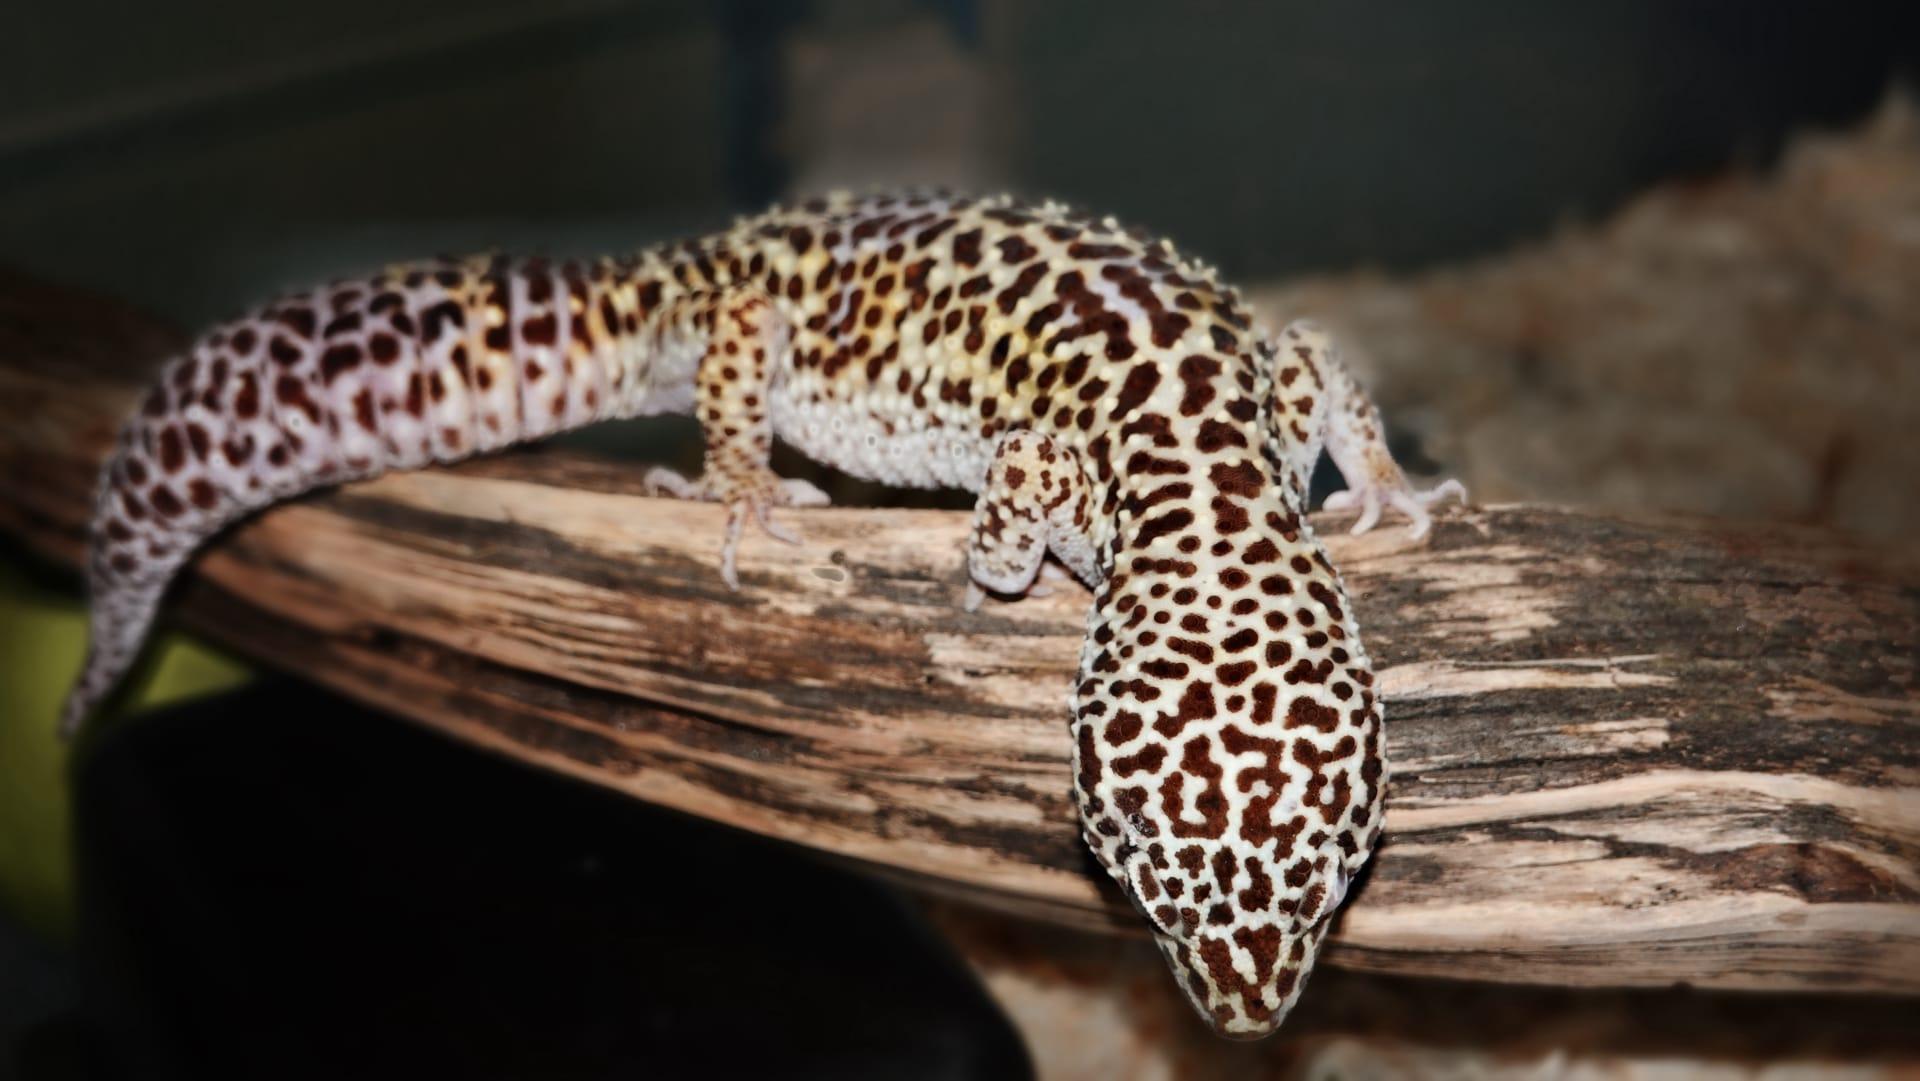 Leopard gecko pictures